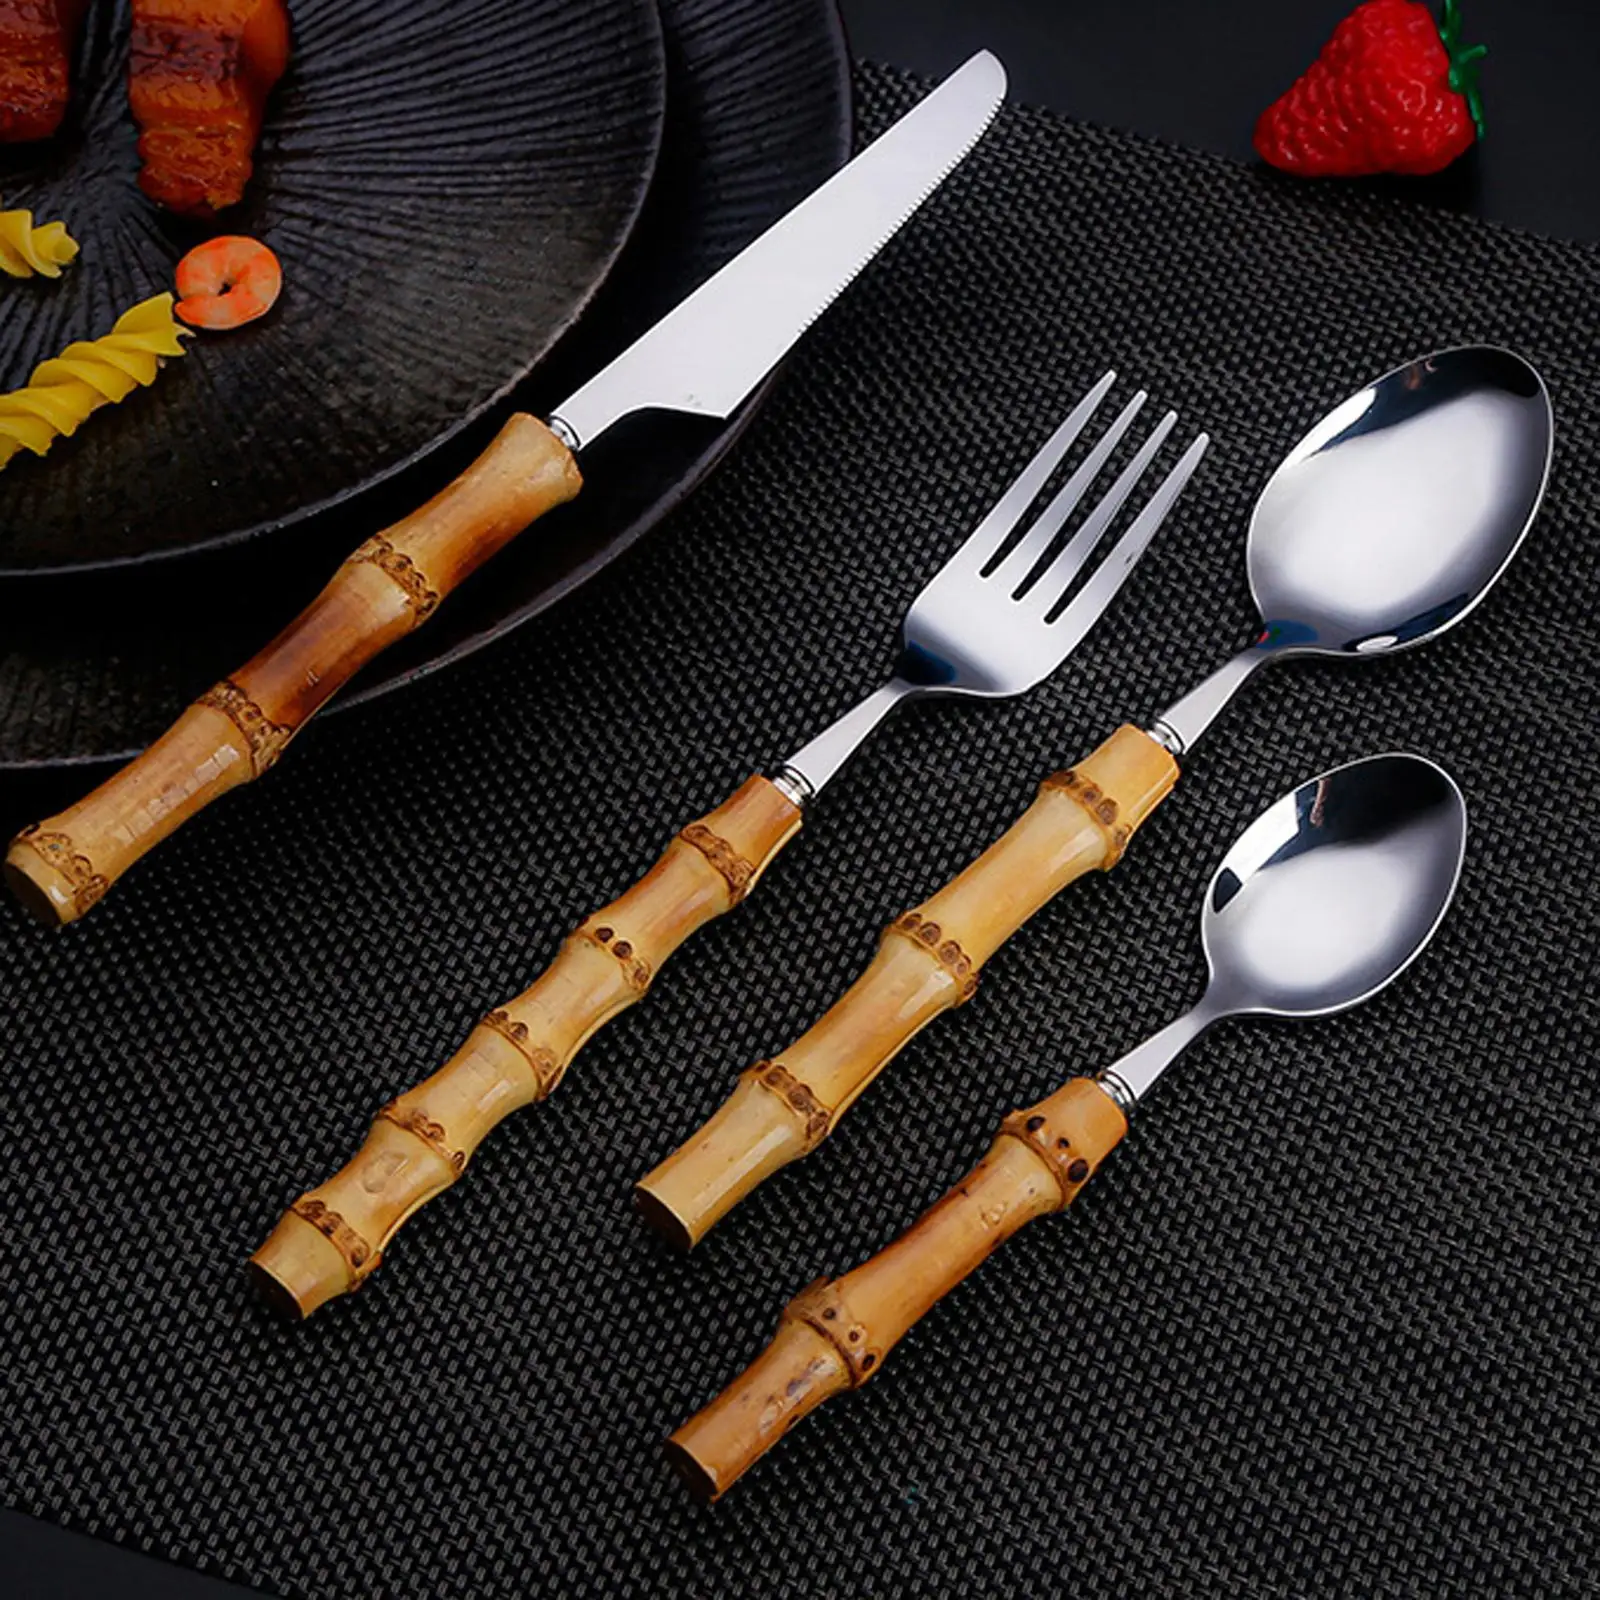 Travel Steak and Forks Tableware Forks Spoons Tableware Service Eating Dinnerware for Hiking Camping